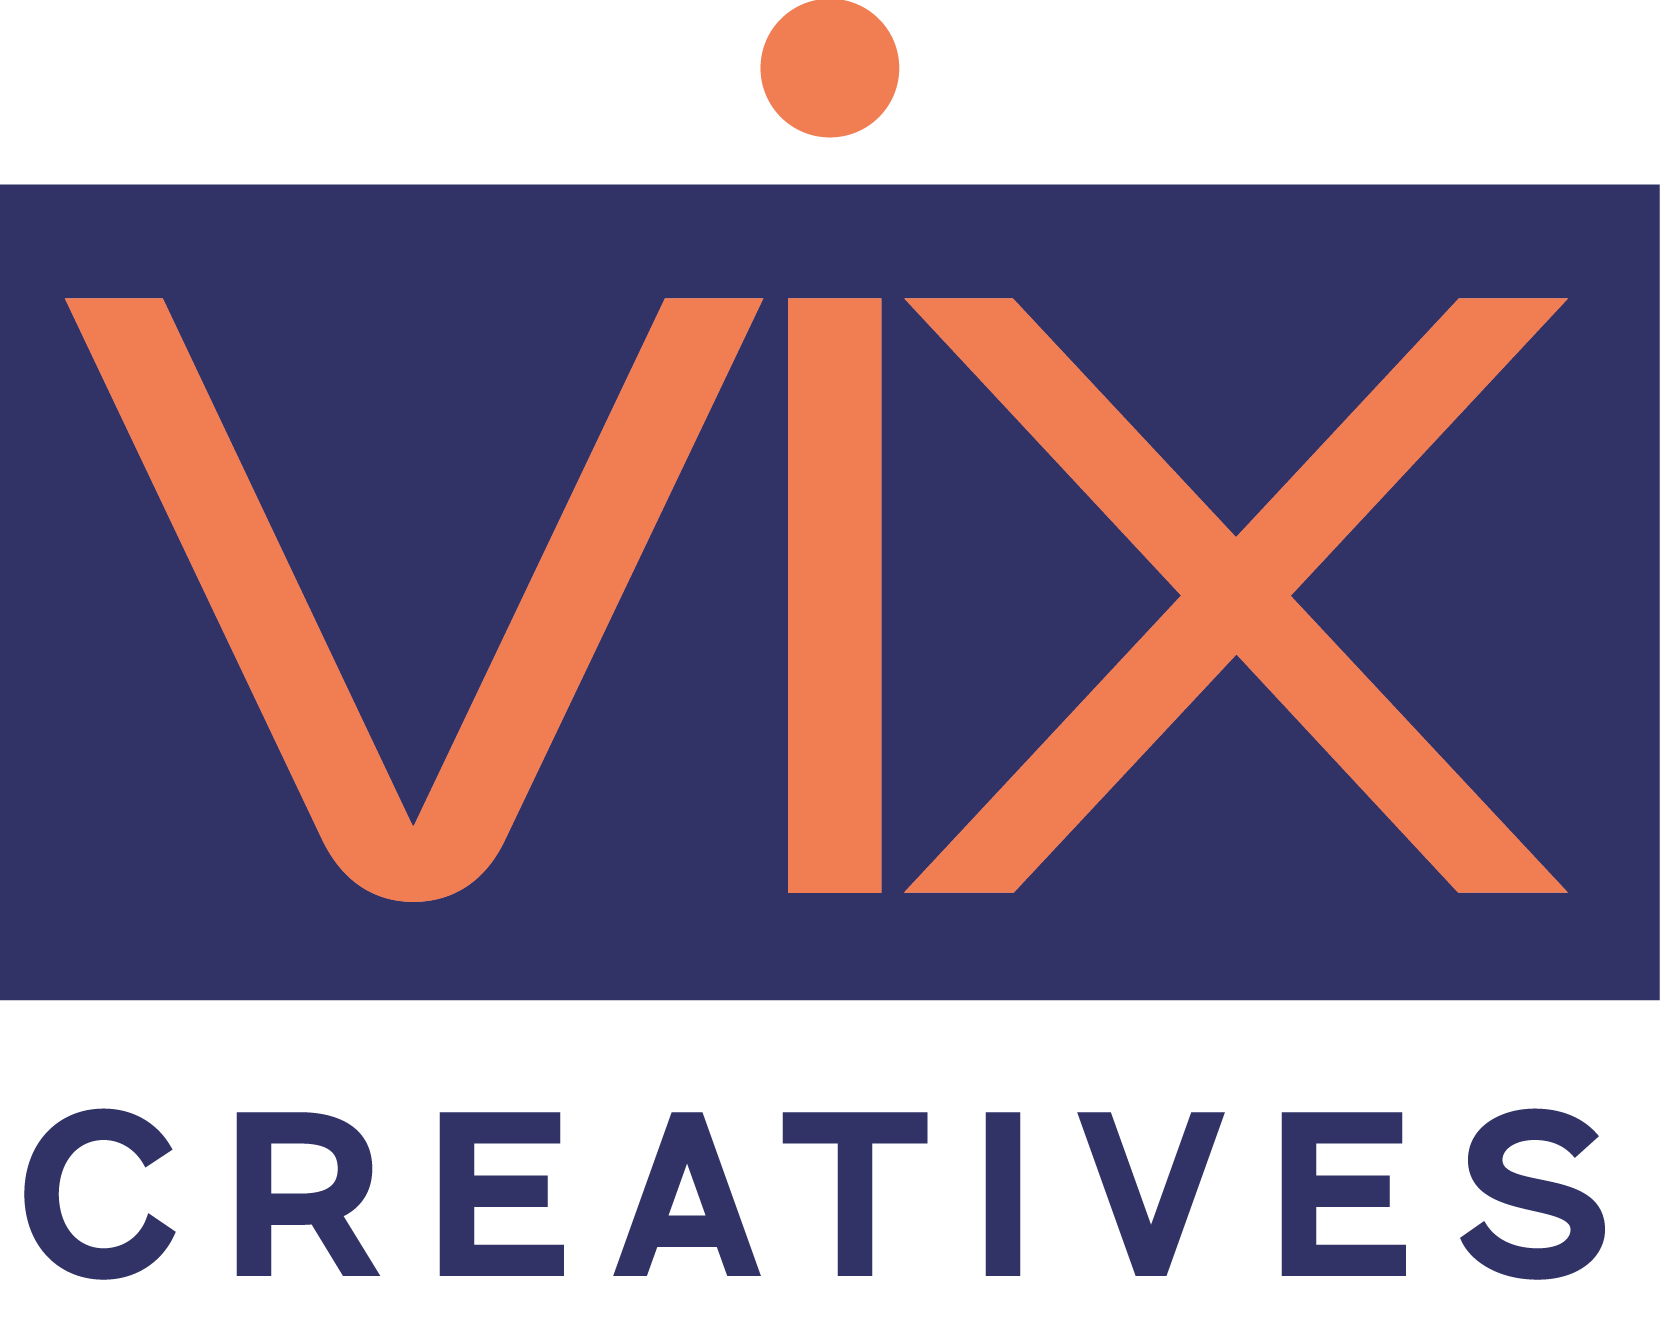 Vix Creatives Agency